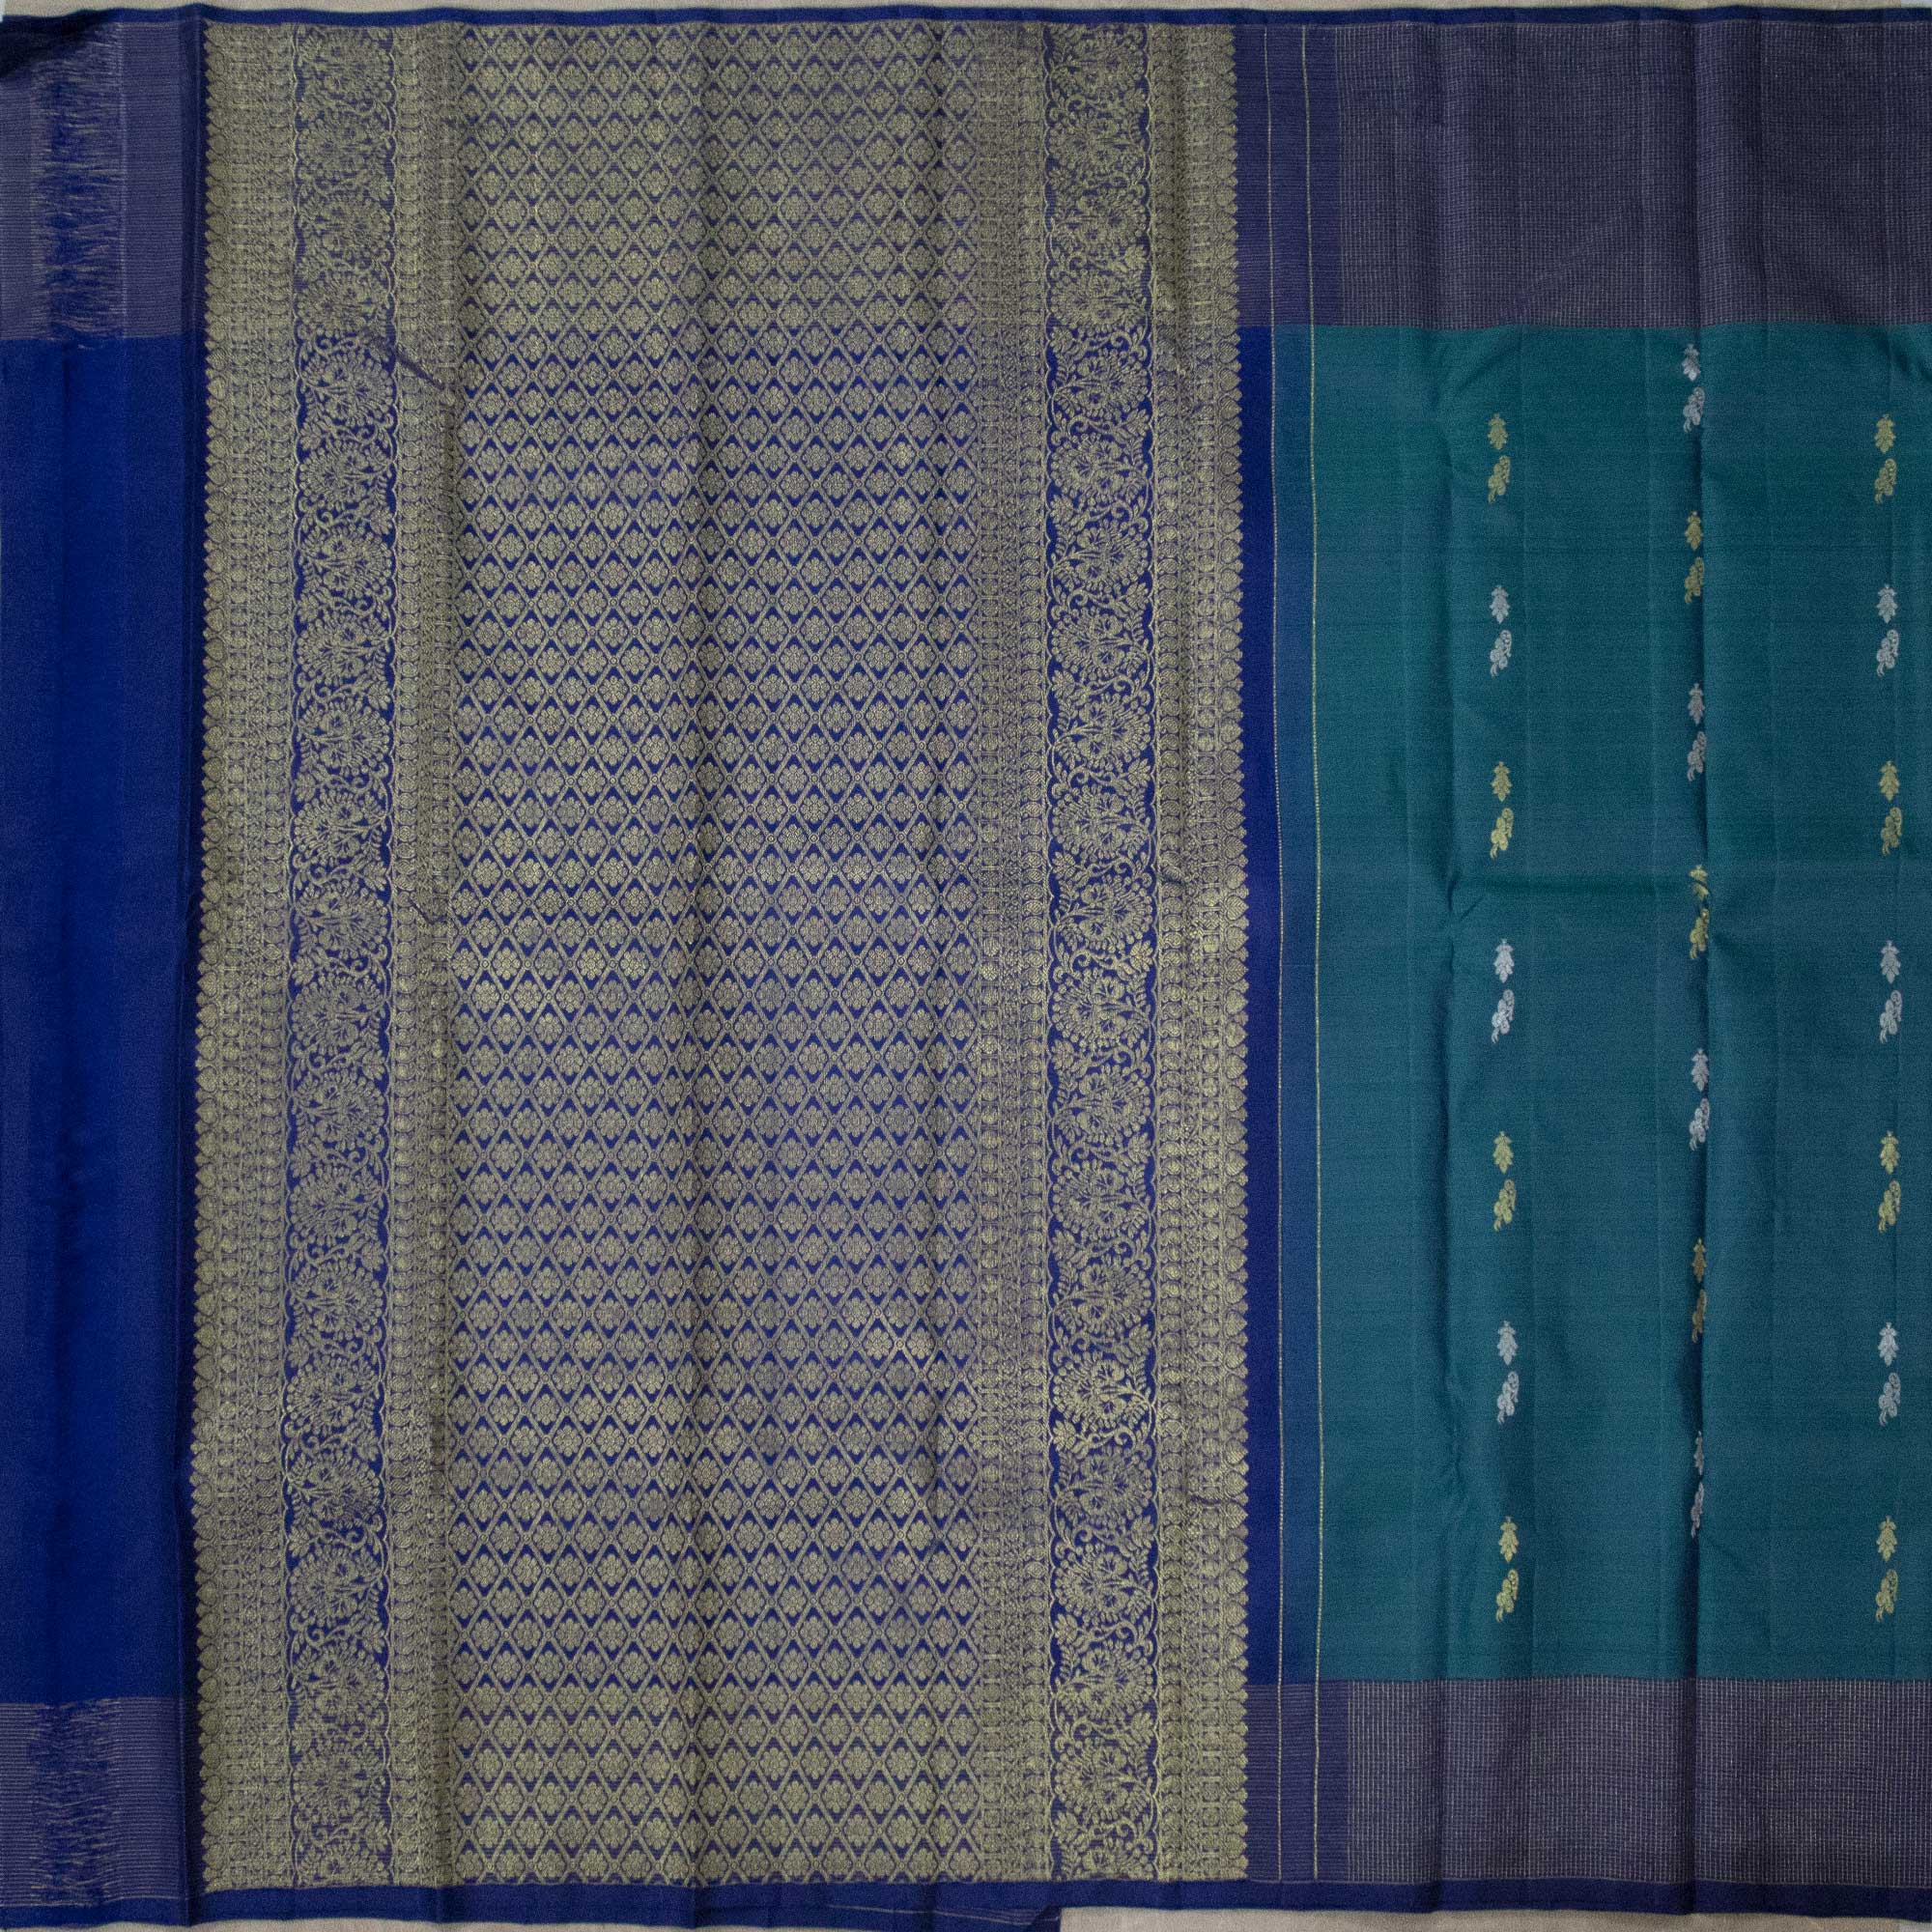 Teal Green Body, Royal Blue Border Kanjivaram Silk Sarees